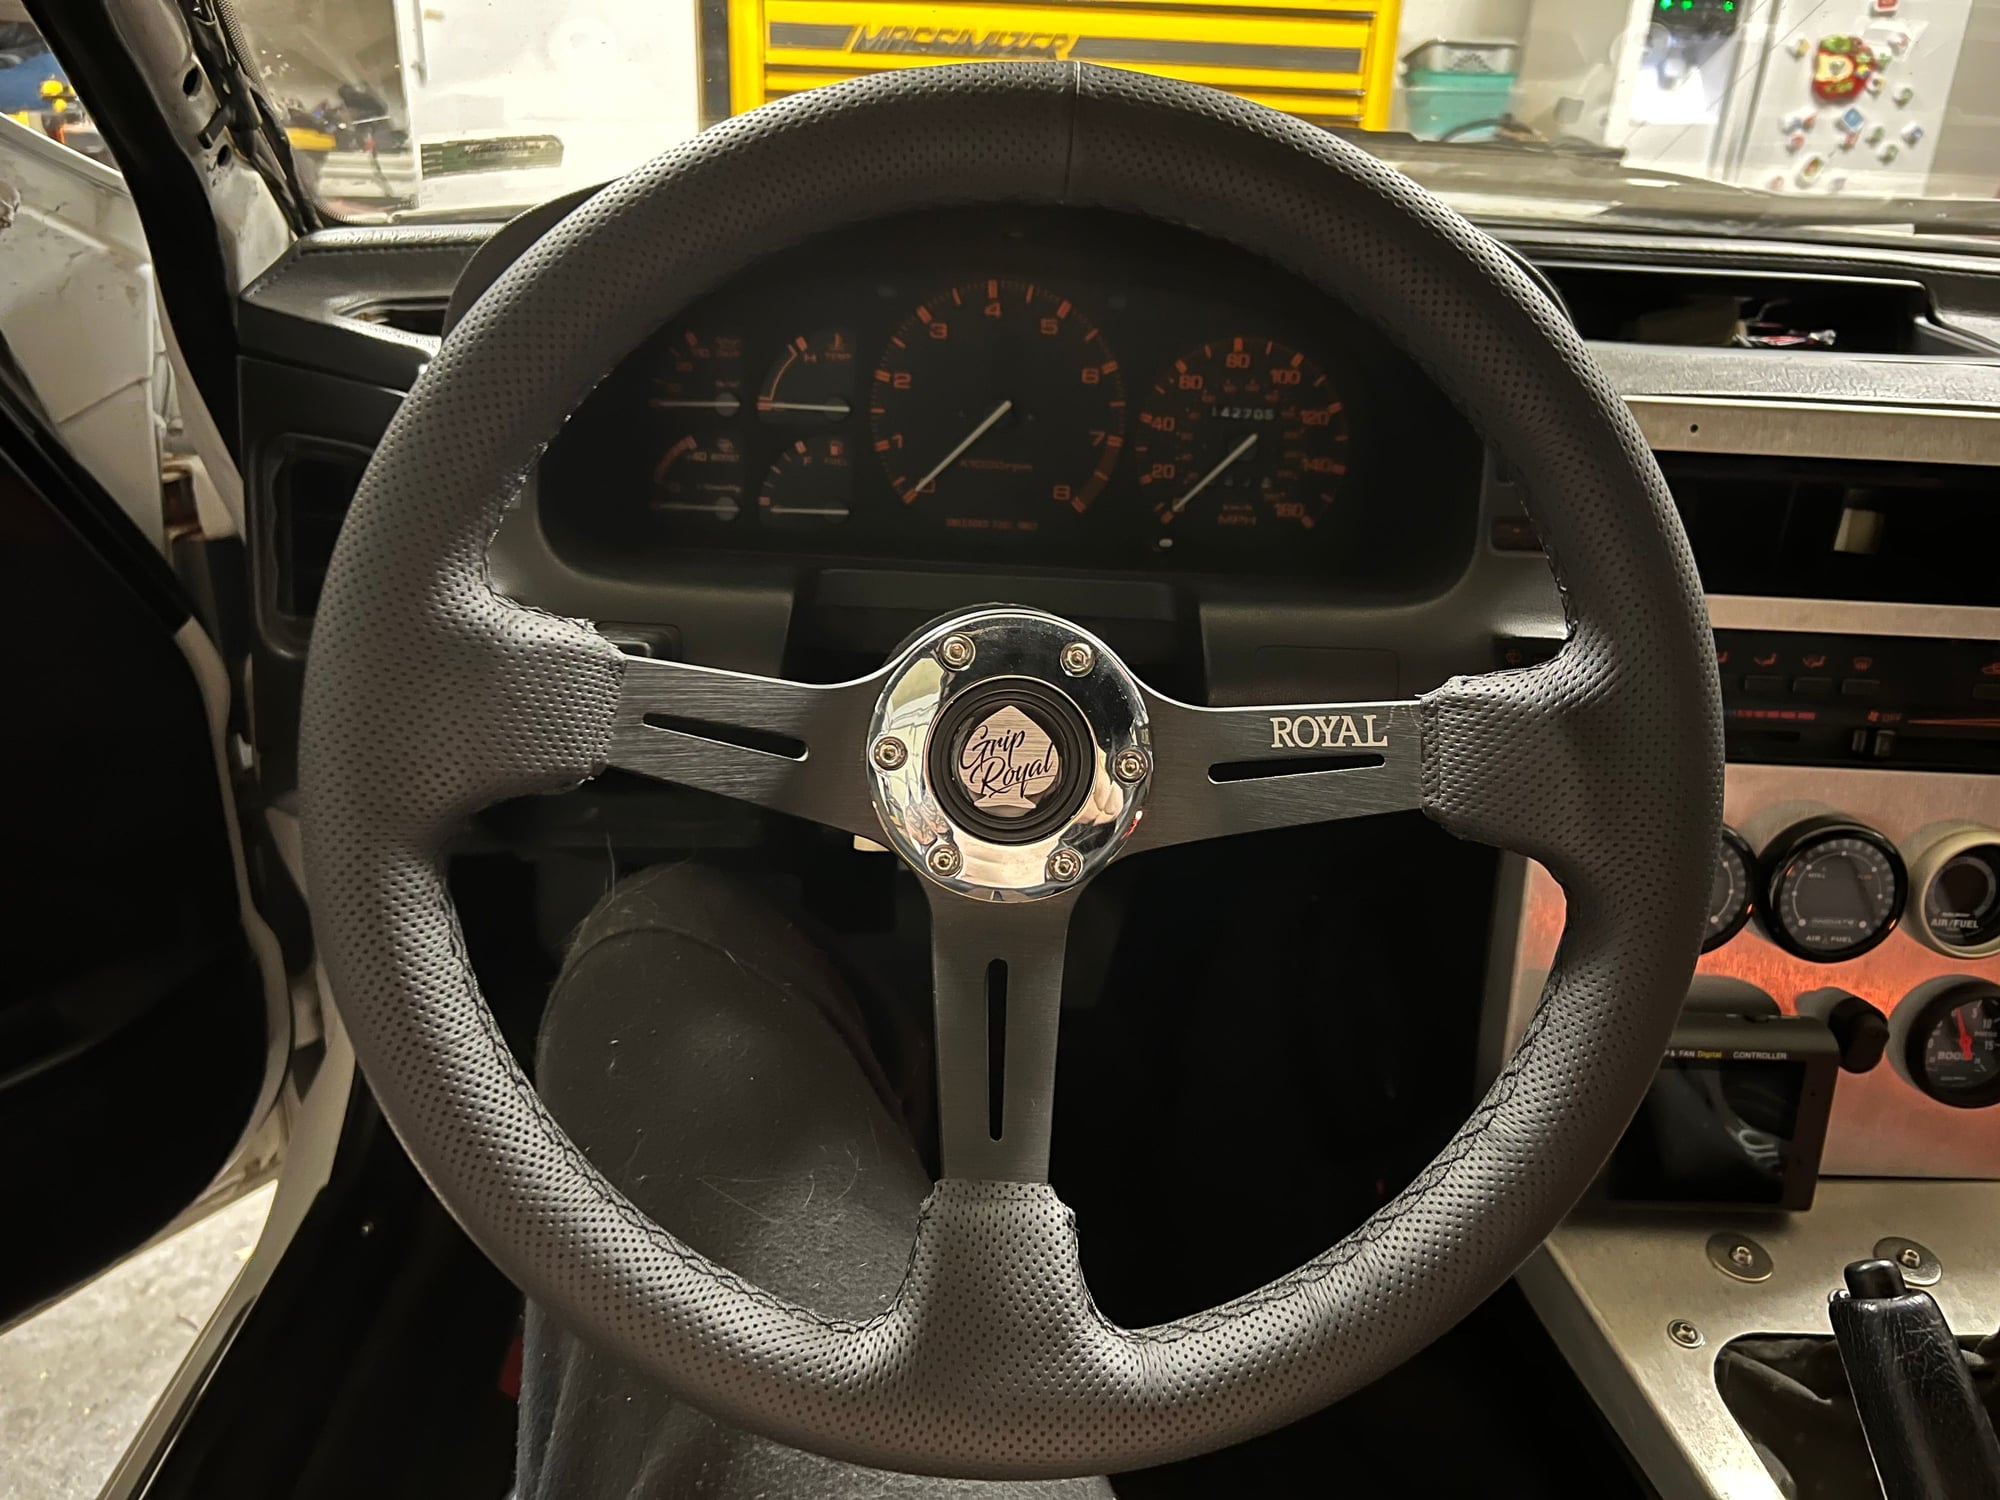 Interior/Upholstery - Grip Royal Deuce steering wheel - Used - 1960 to 2021 Mazda All Models - Seneca, MO 64865, United States